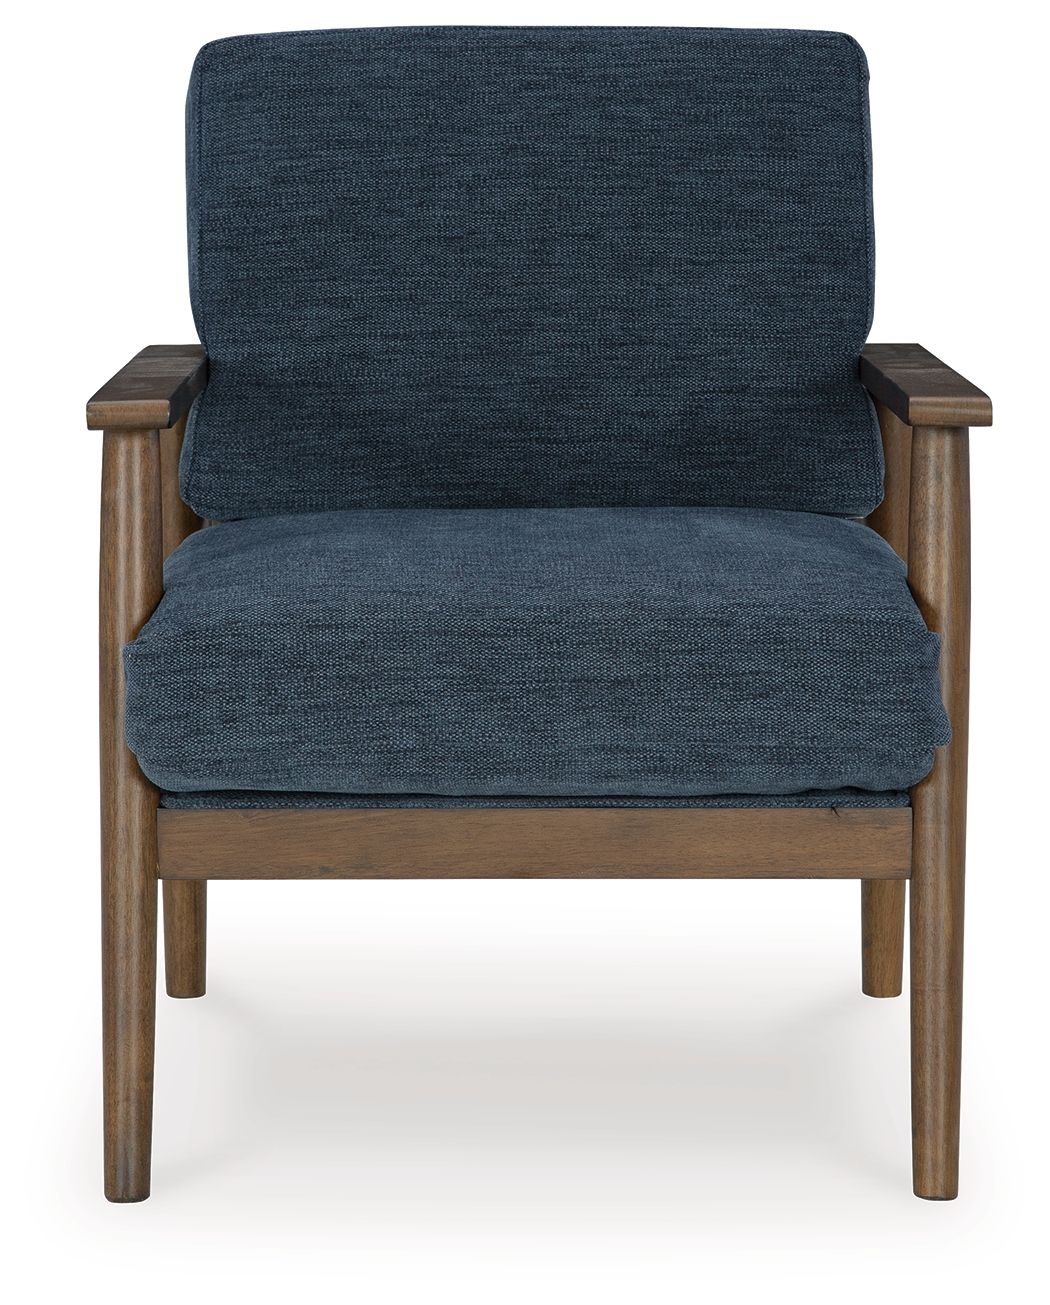 Bixler - Navy - 3 Pc. - Sofa, Loveseat, Accent Chair